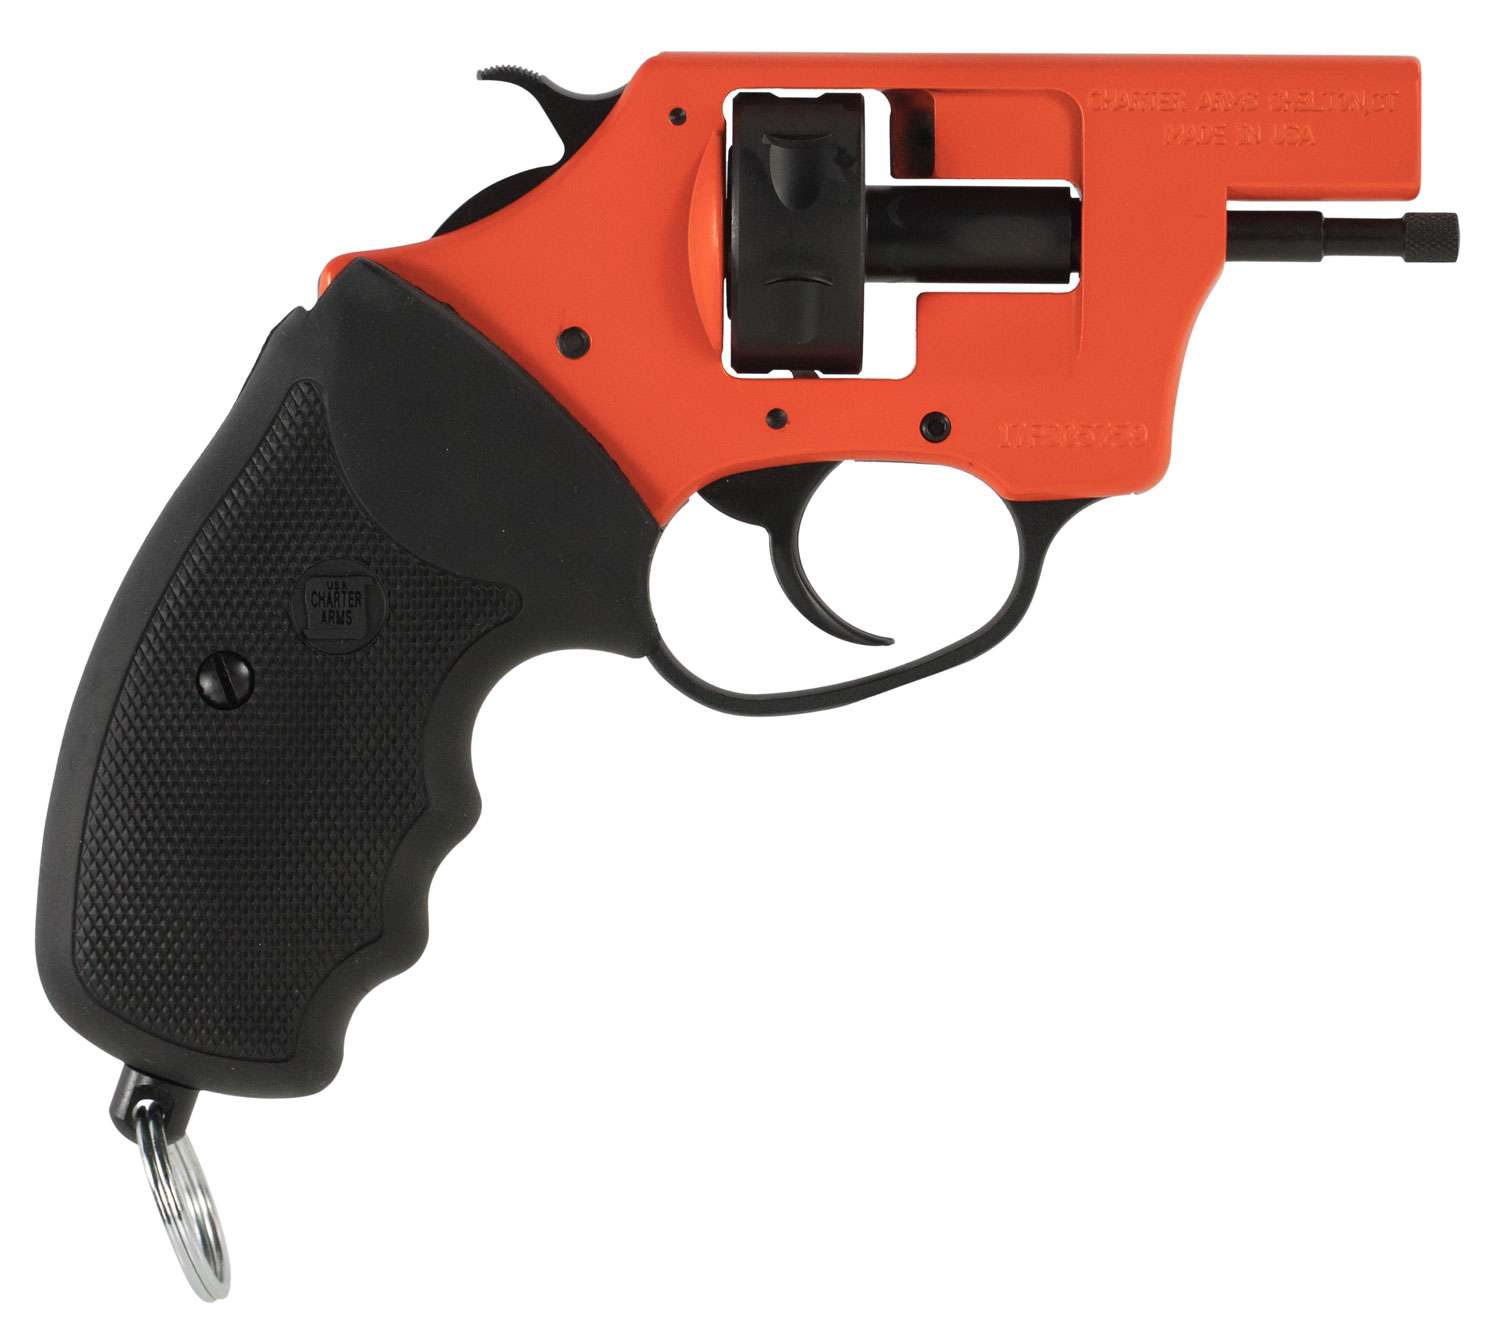 CA PRO 209 STARTER PISTOL 209 PRIMER - Revolvers